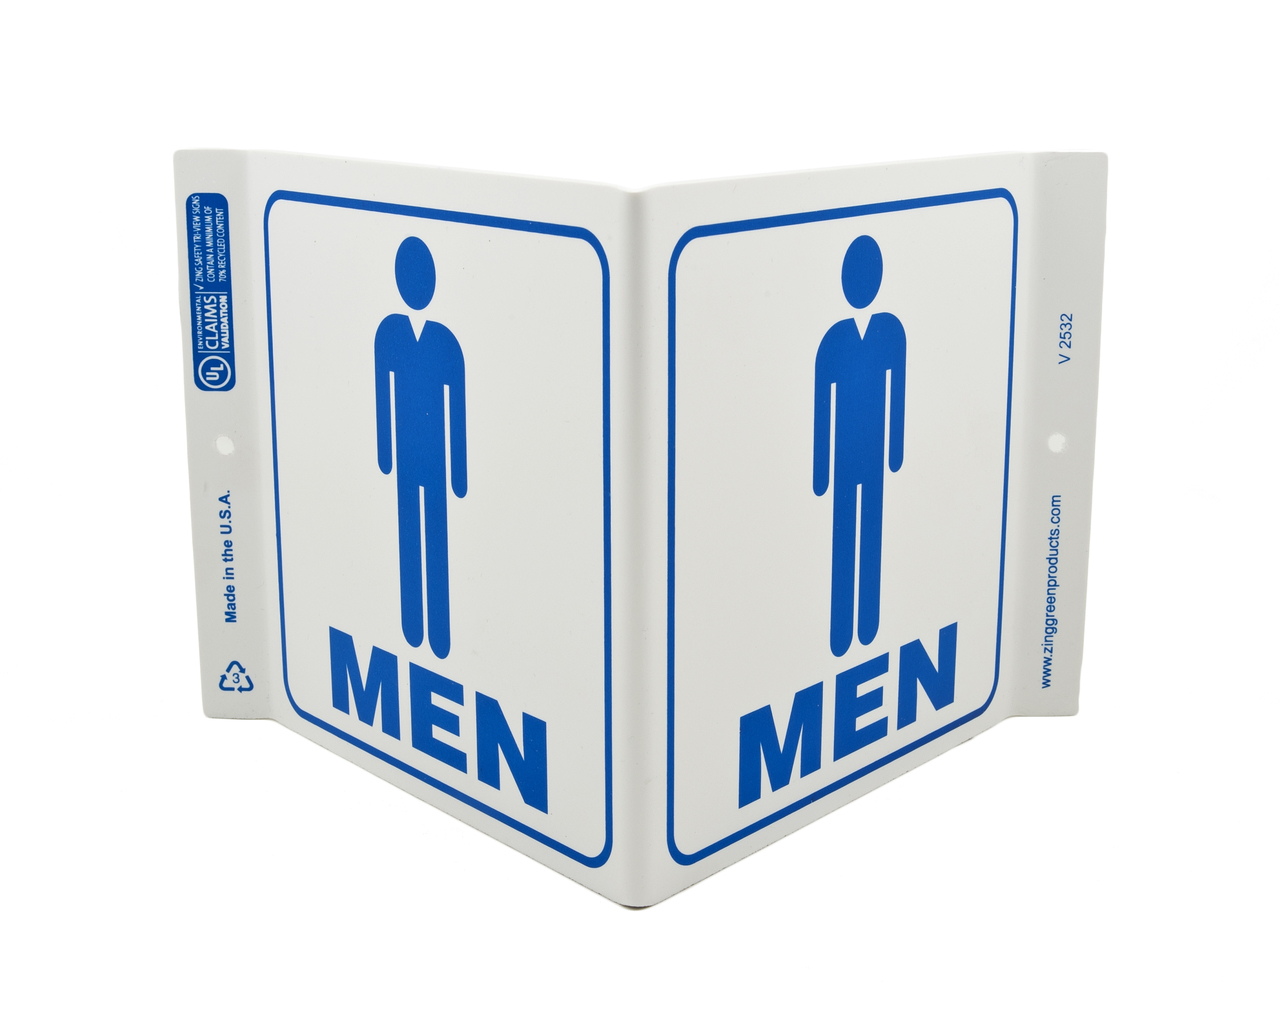 ZING Eco Public Facility V Sign, Restroom Men, 7Hx12Wx5D, Recycled Plastic